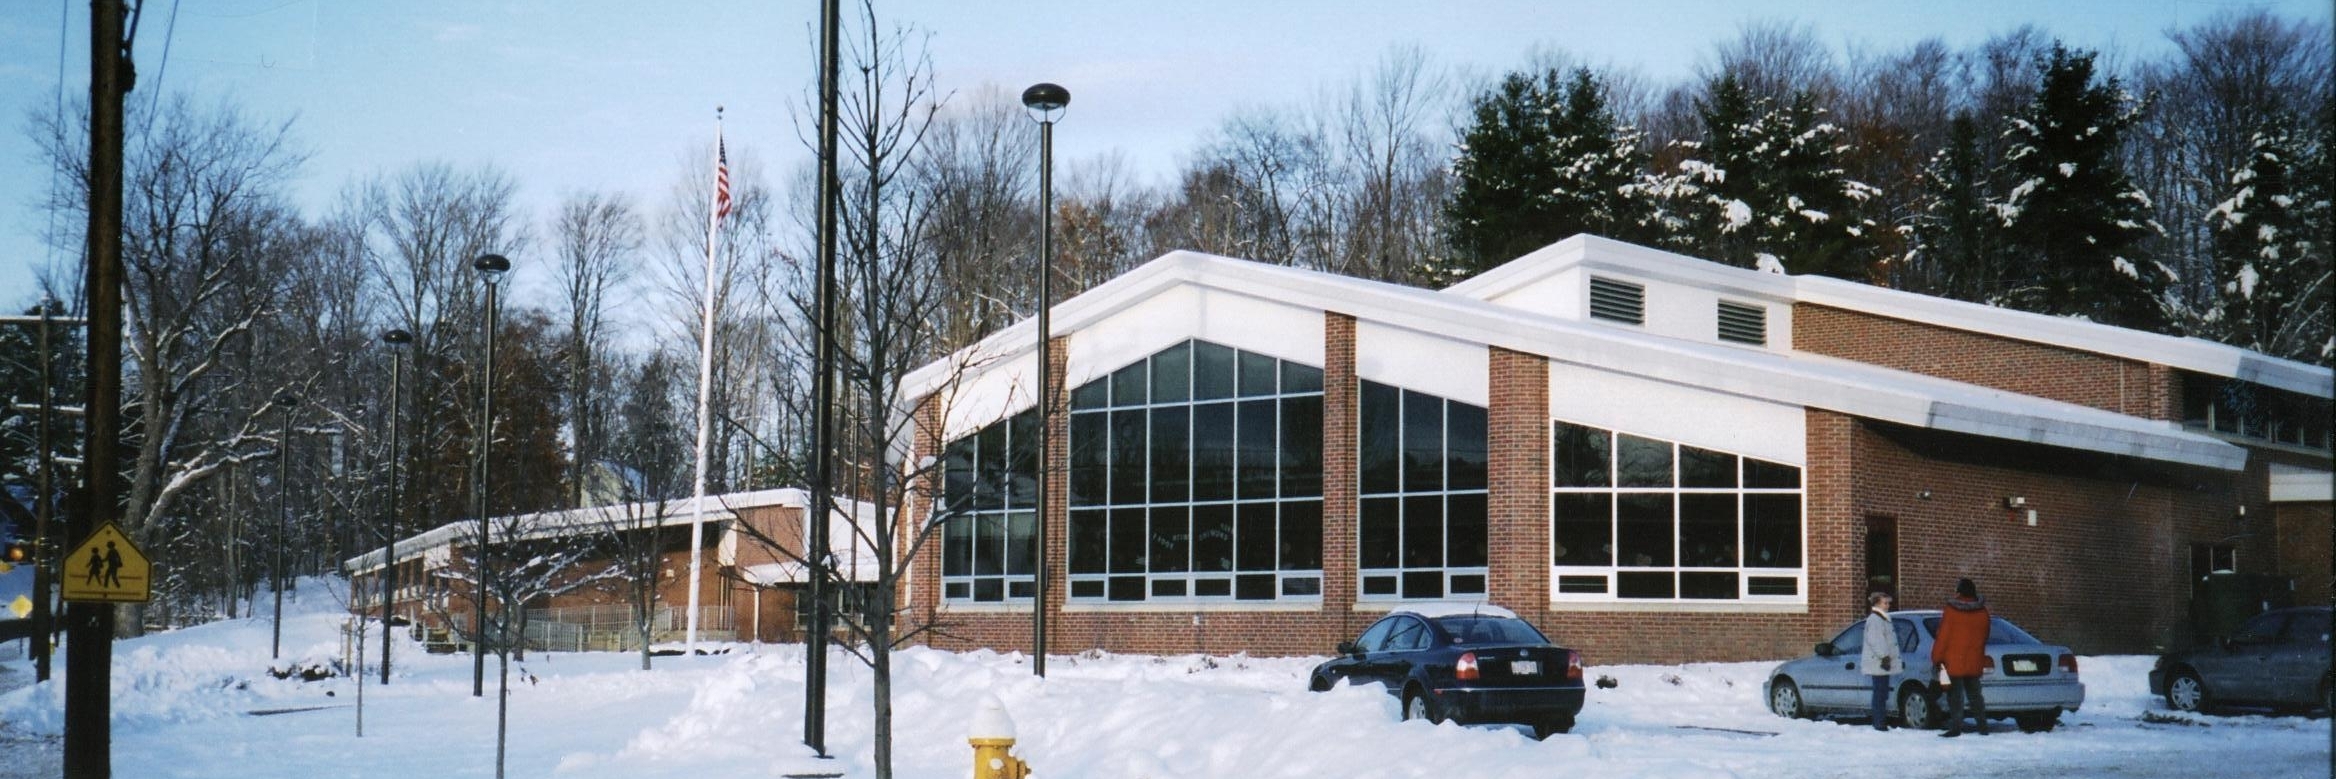  Stearns Elementary School, Pittsfield, Massachusetts 